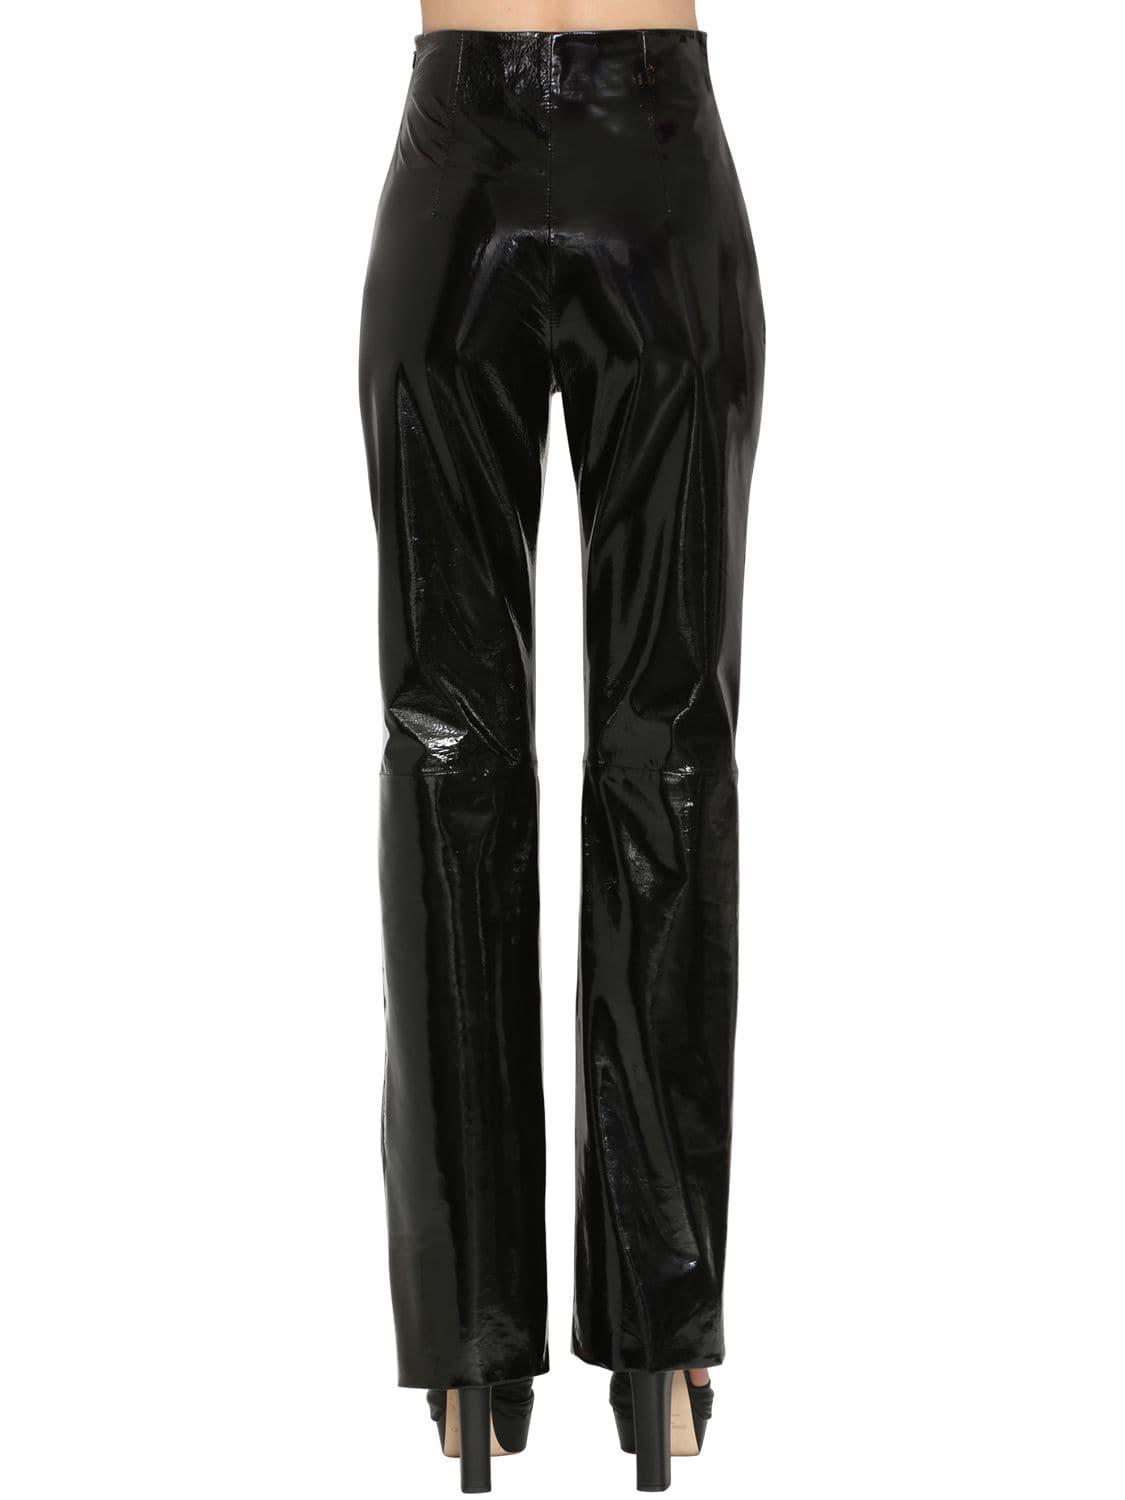 16Arlington Patent Leather Pants in Black - Lyst